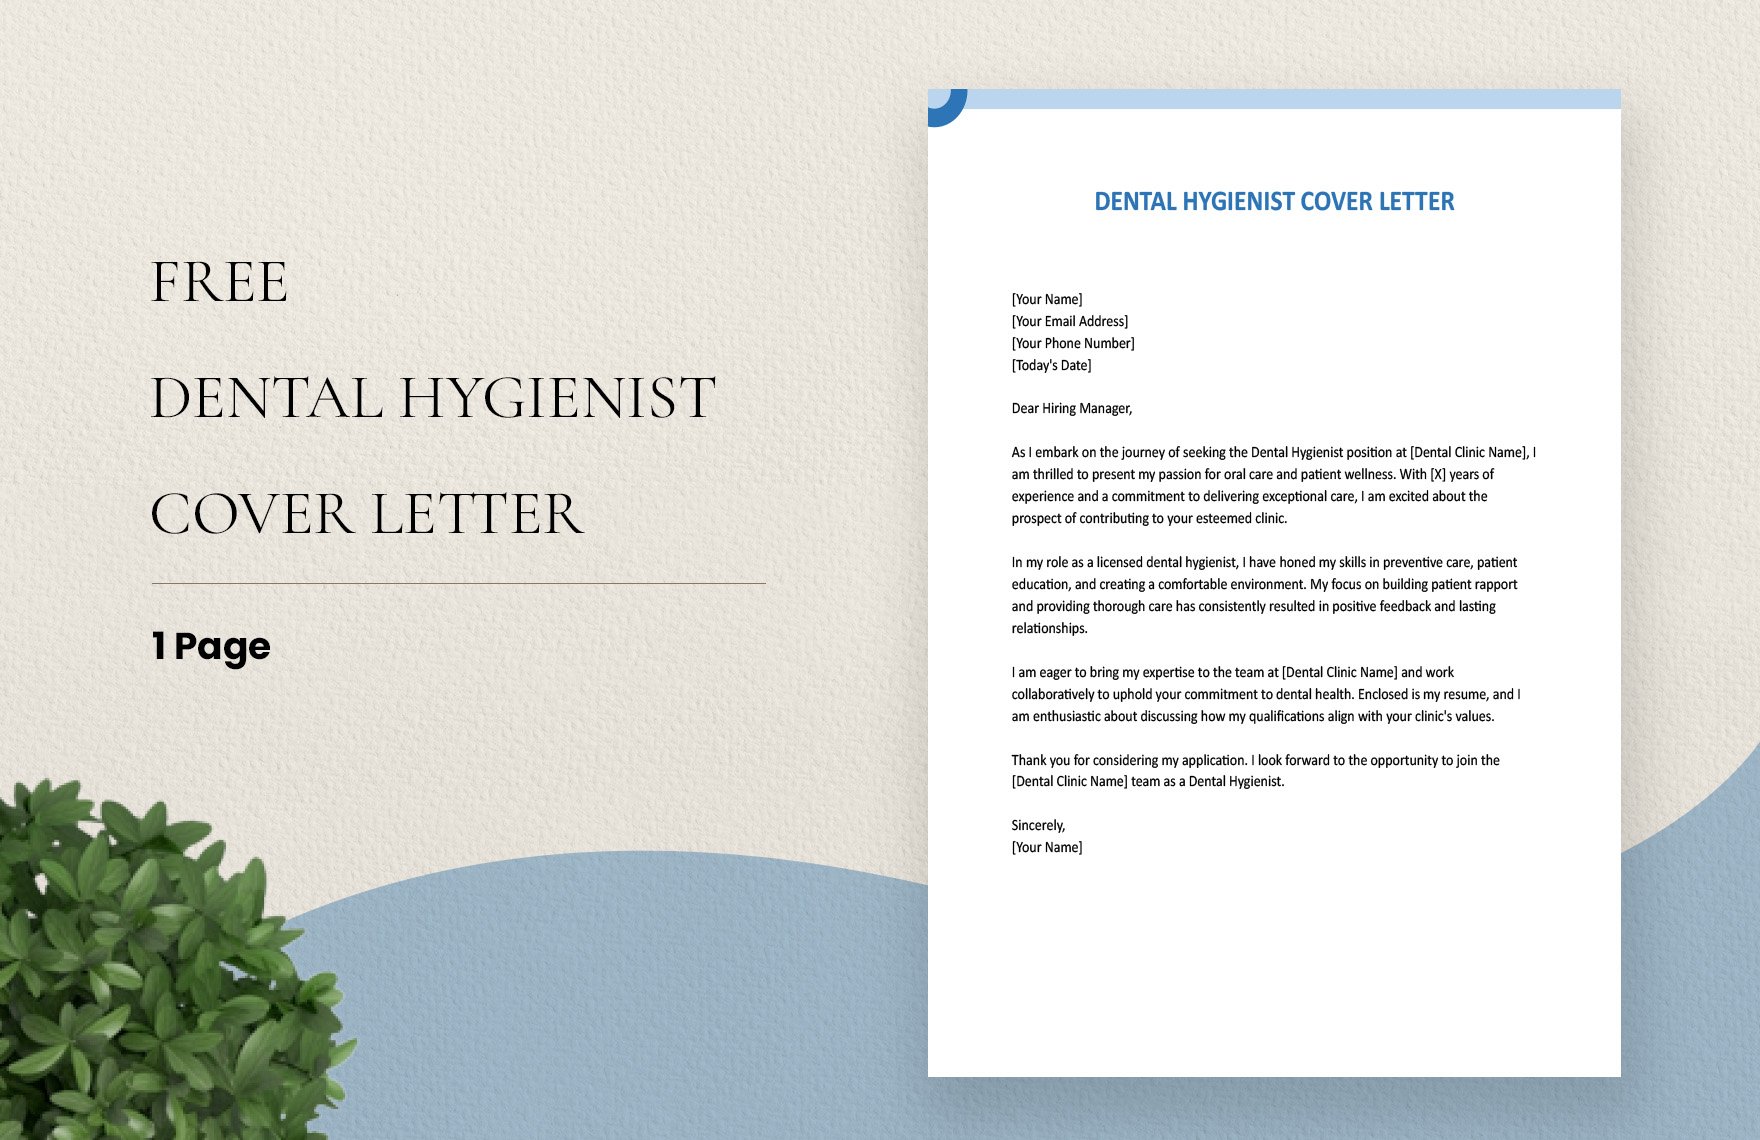 Dental Hygienist Cover Letter in Word, Google Docs